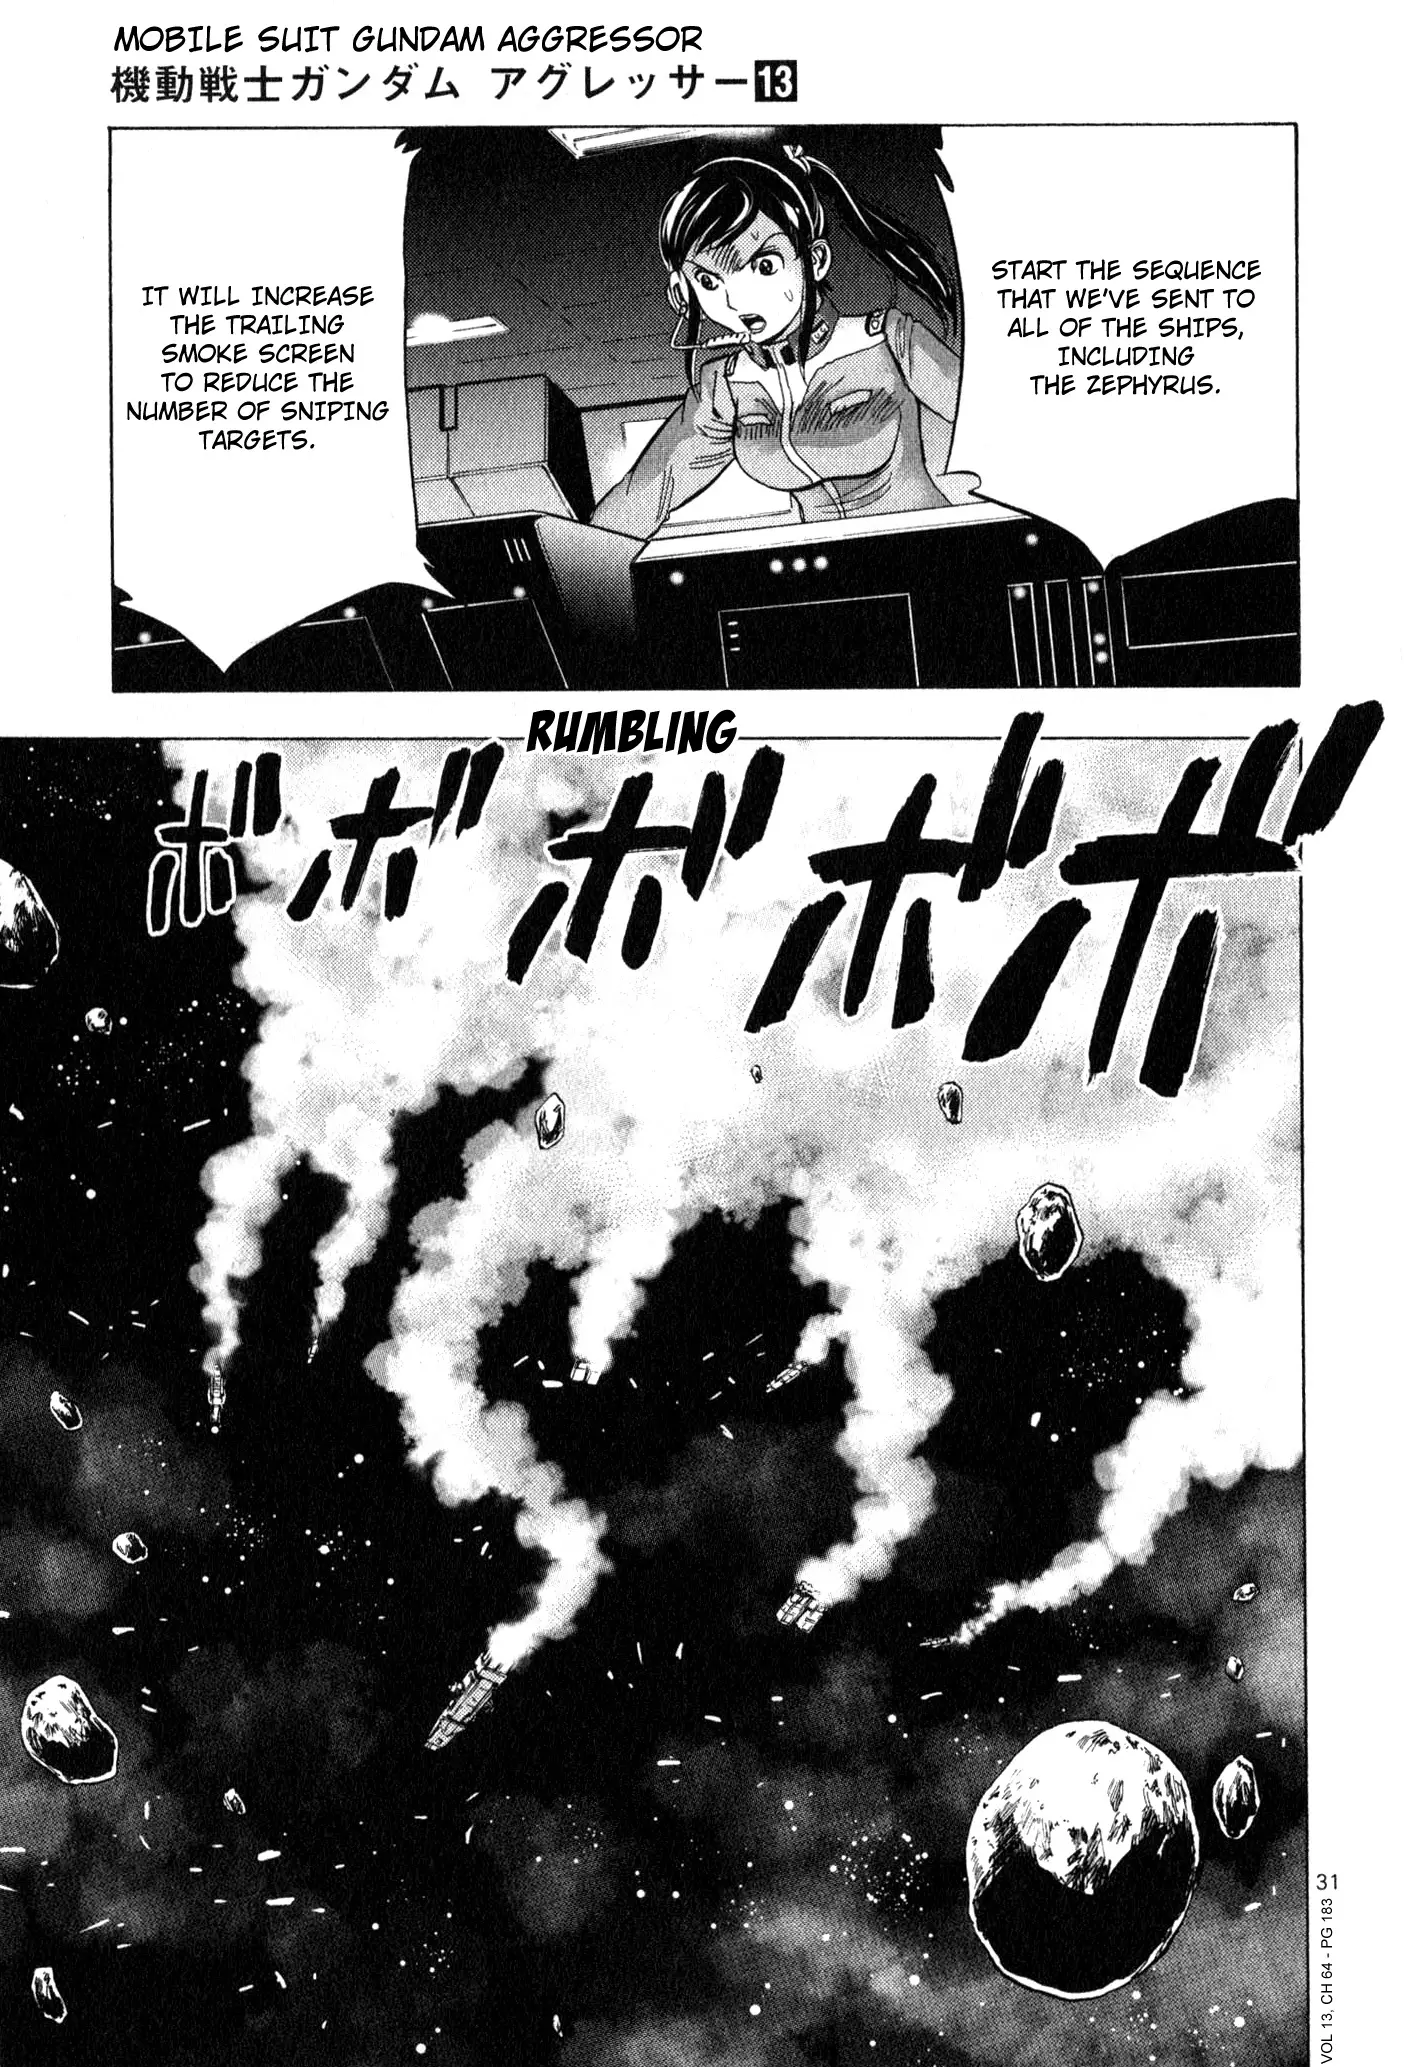 Mobile Suit Gundam Aggressor - 64 page 31-4114d02c